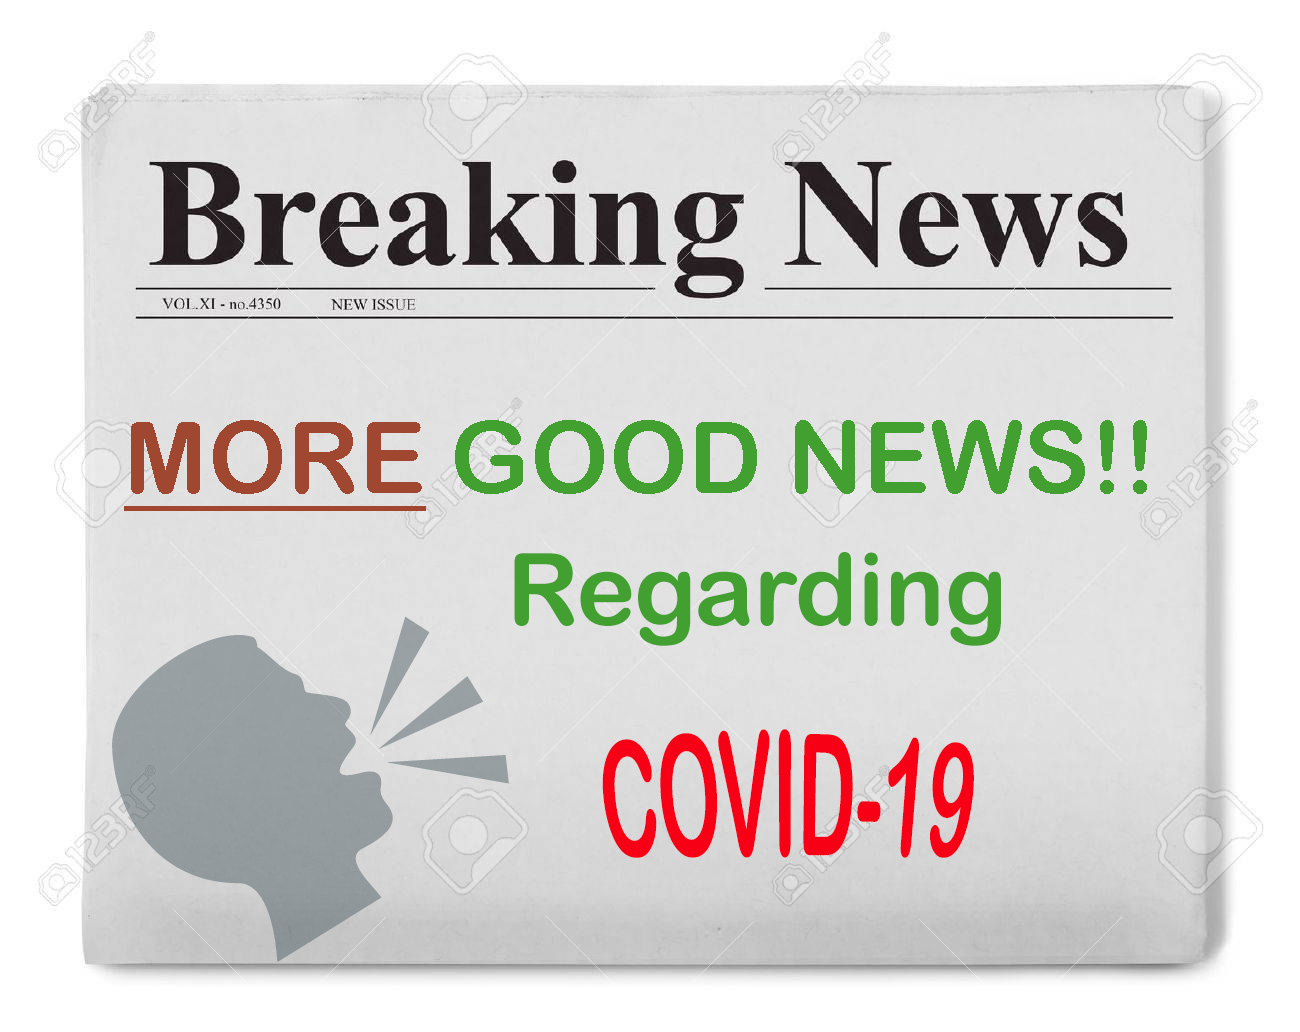 MORE GOOD NEWS REGARDING COVID-19